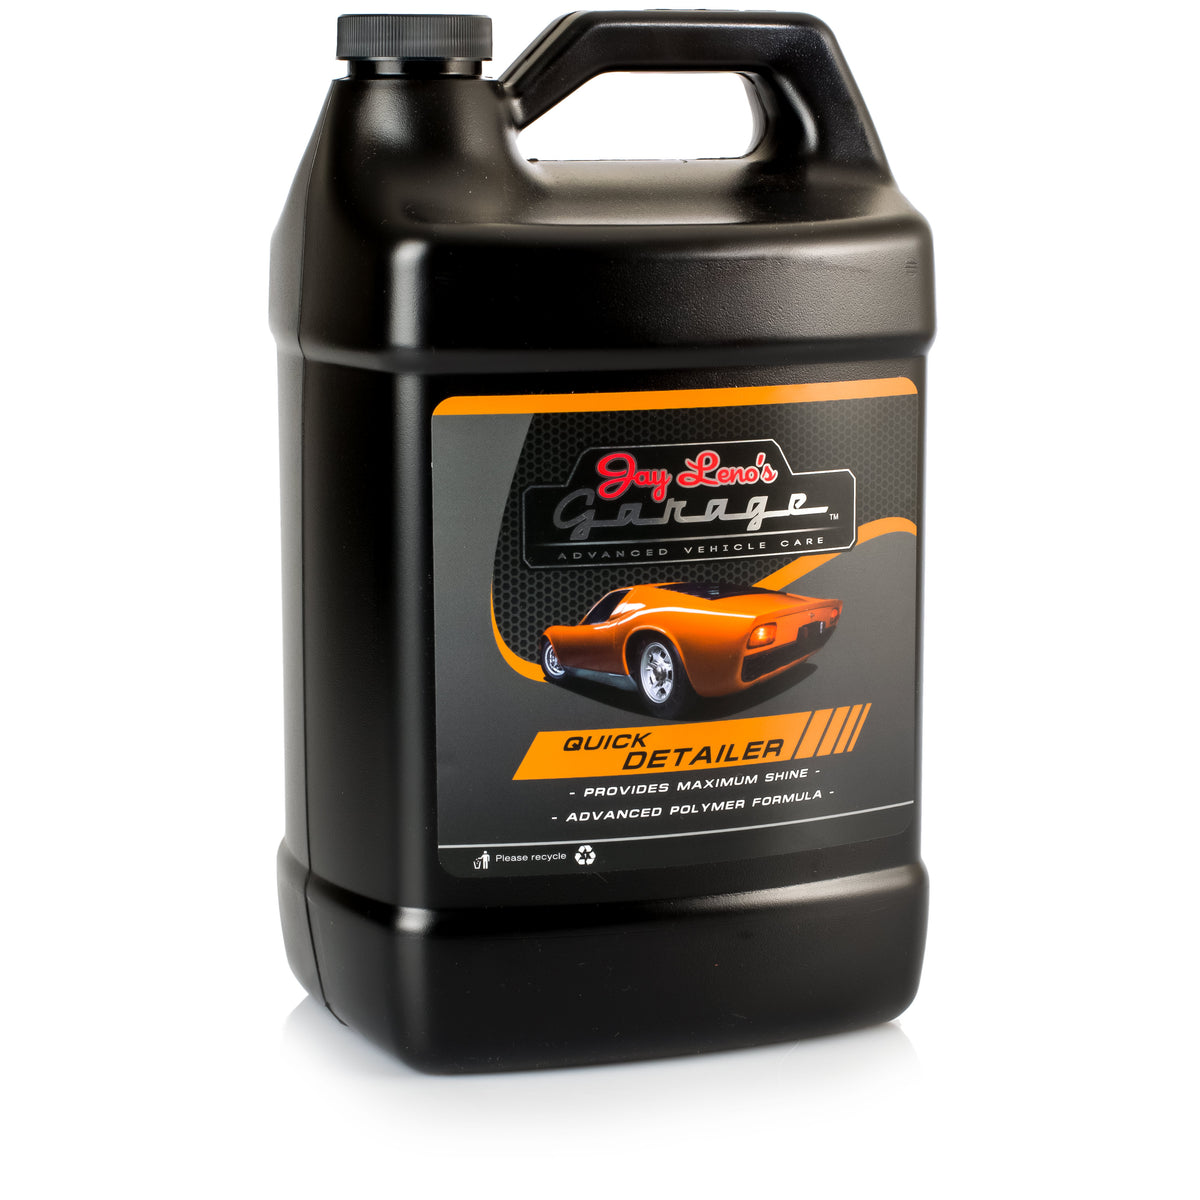 Show Room Shine Auto Detail Spray - Best Quick Detailer Spray for Cars